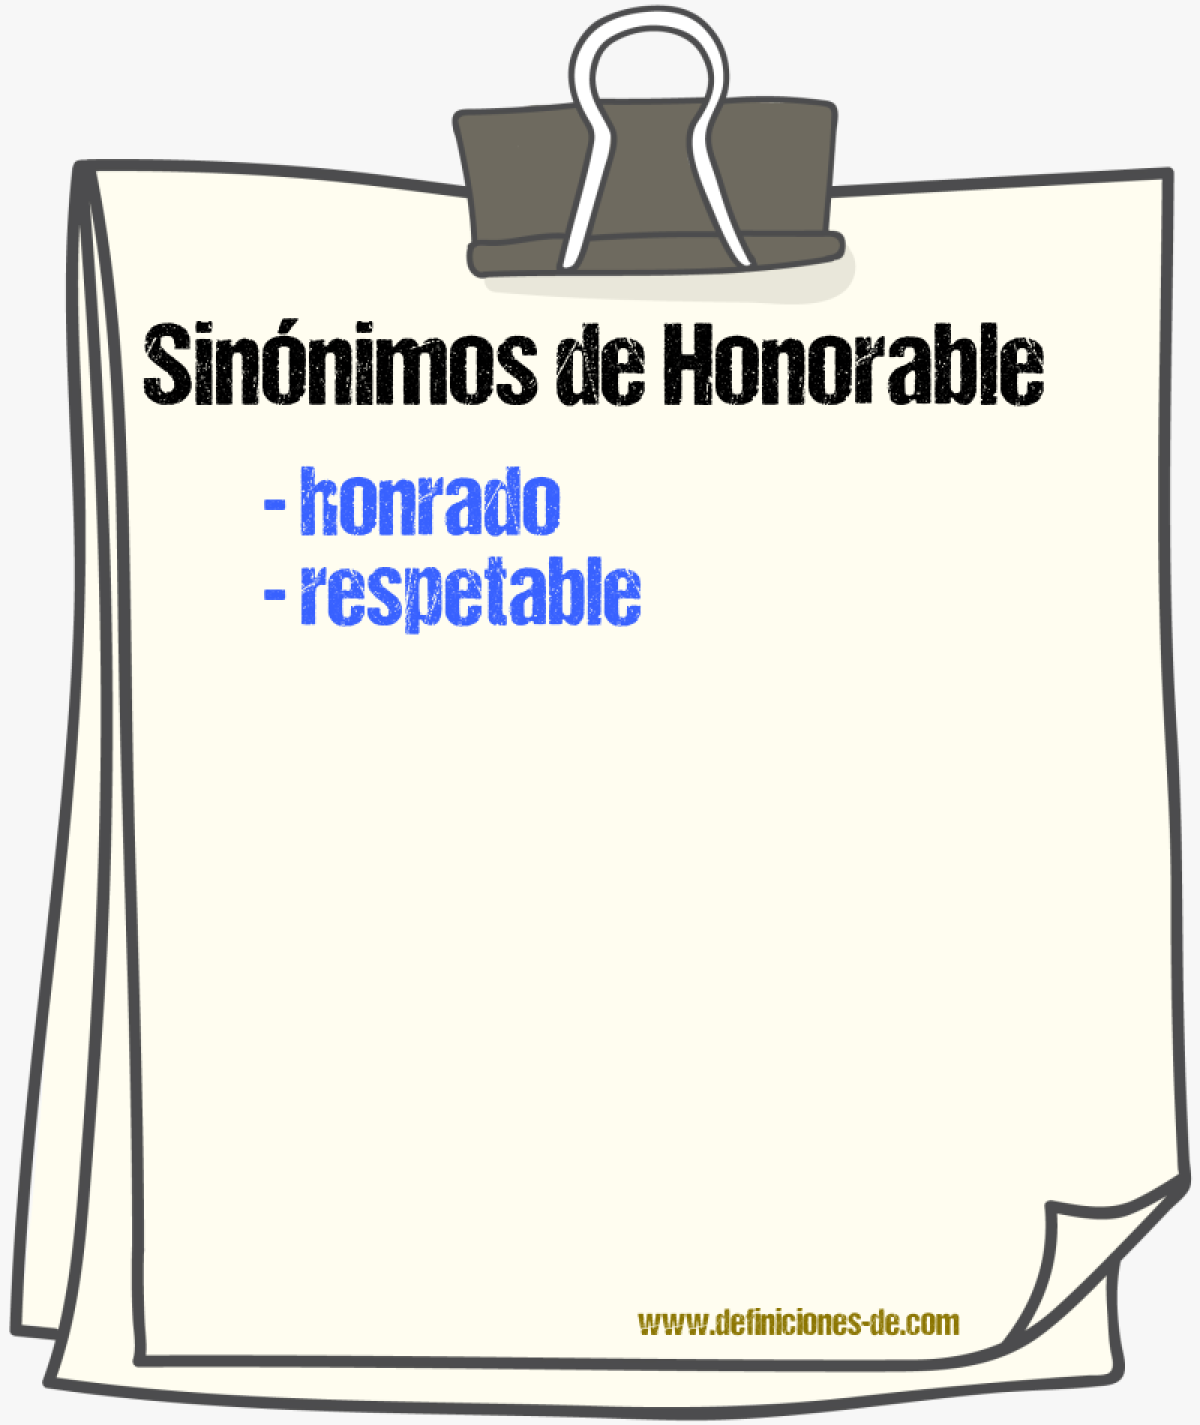 Sinónimos de honorable